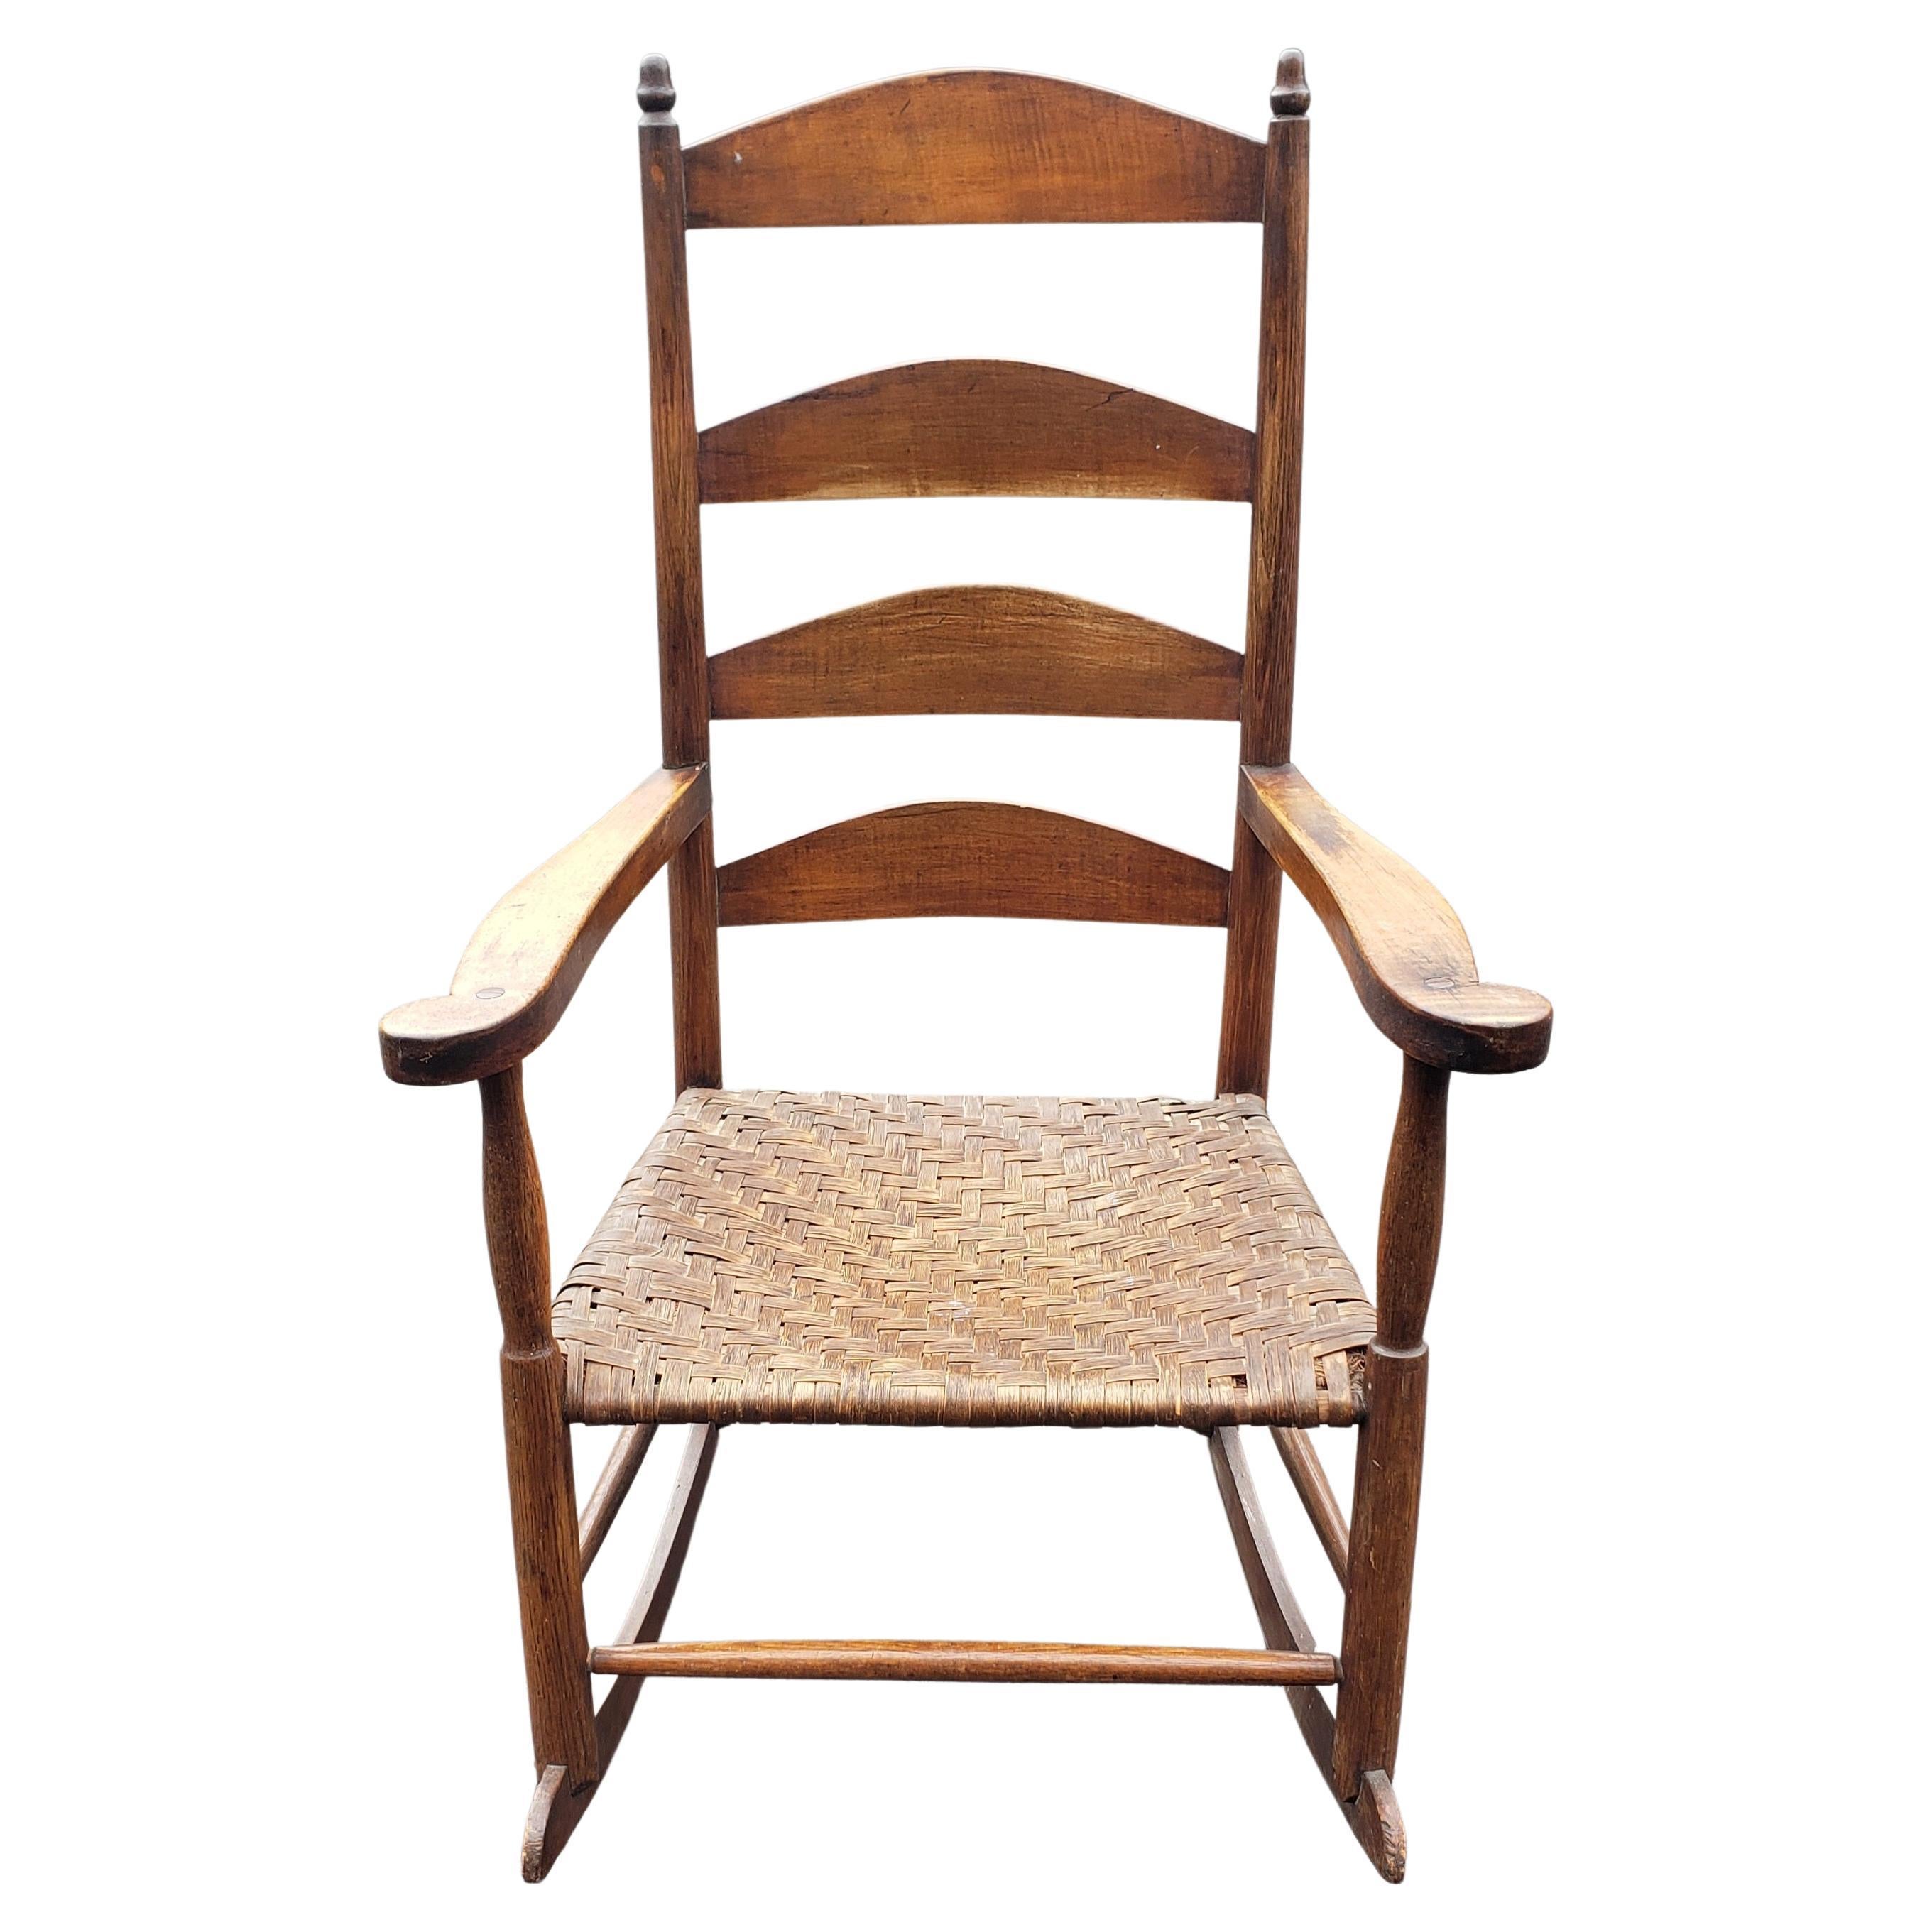 Early American Walnut Ladder Back Rocking Chair w/ Double Sided Split Reed Seat